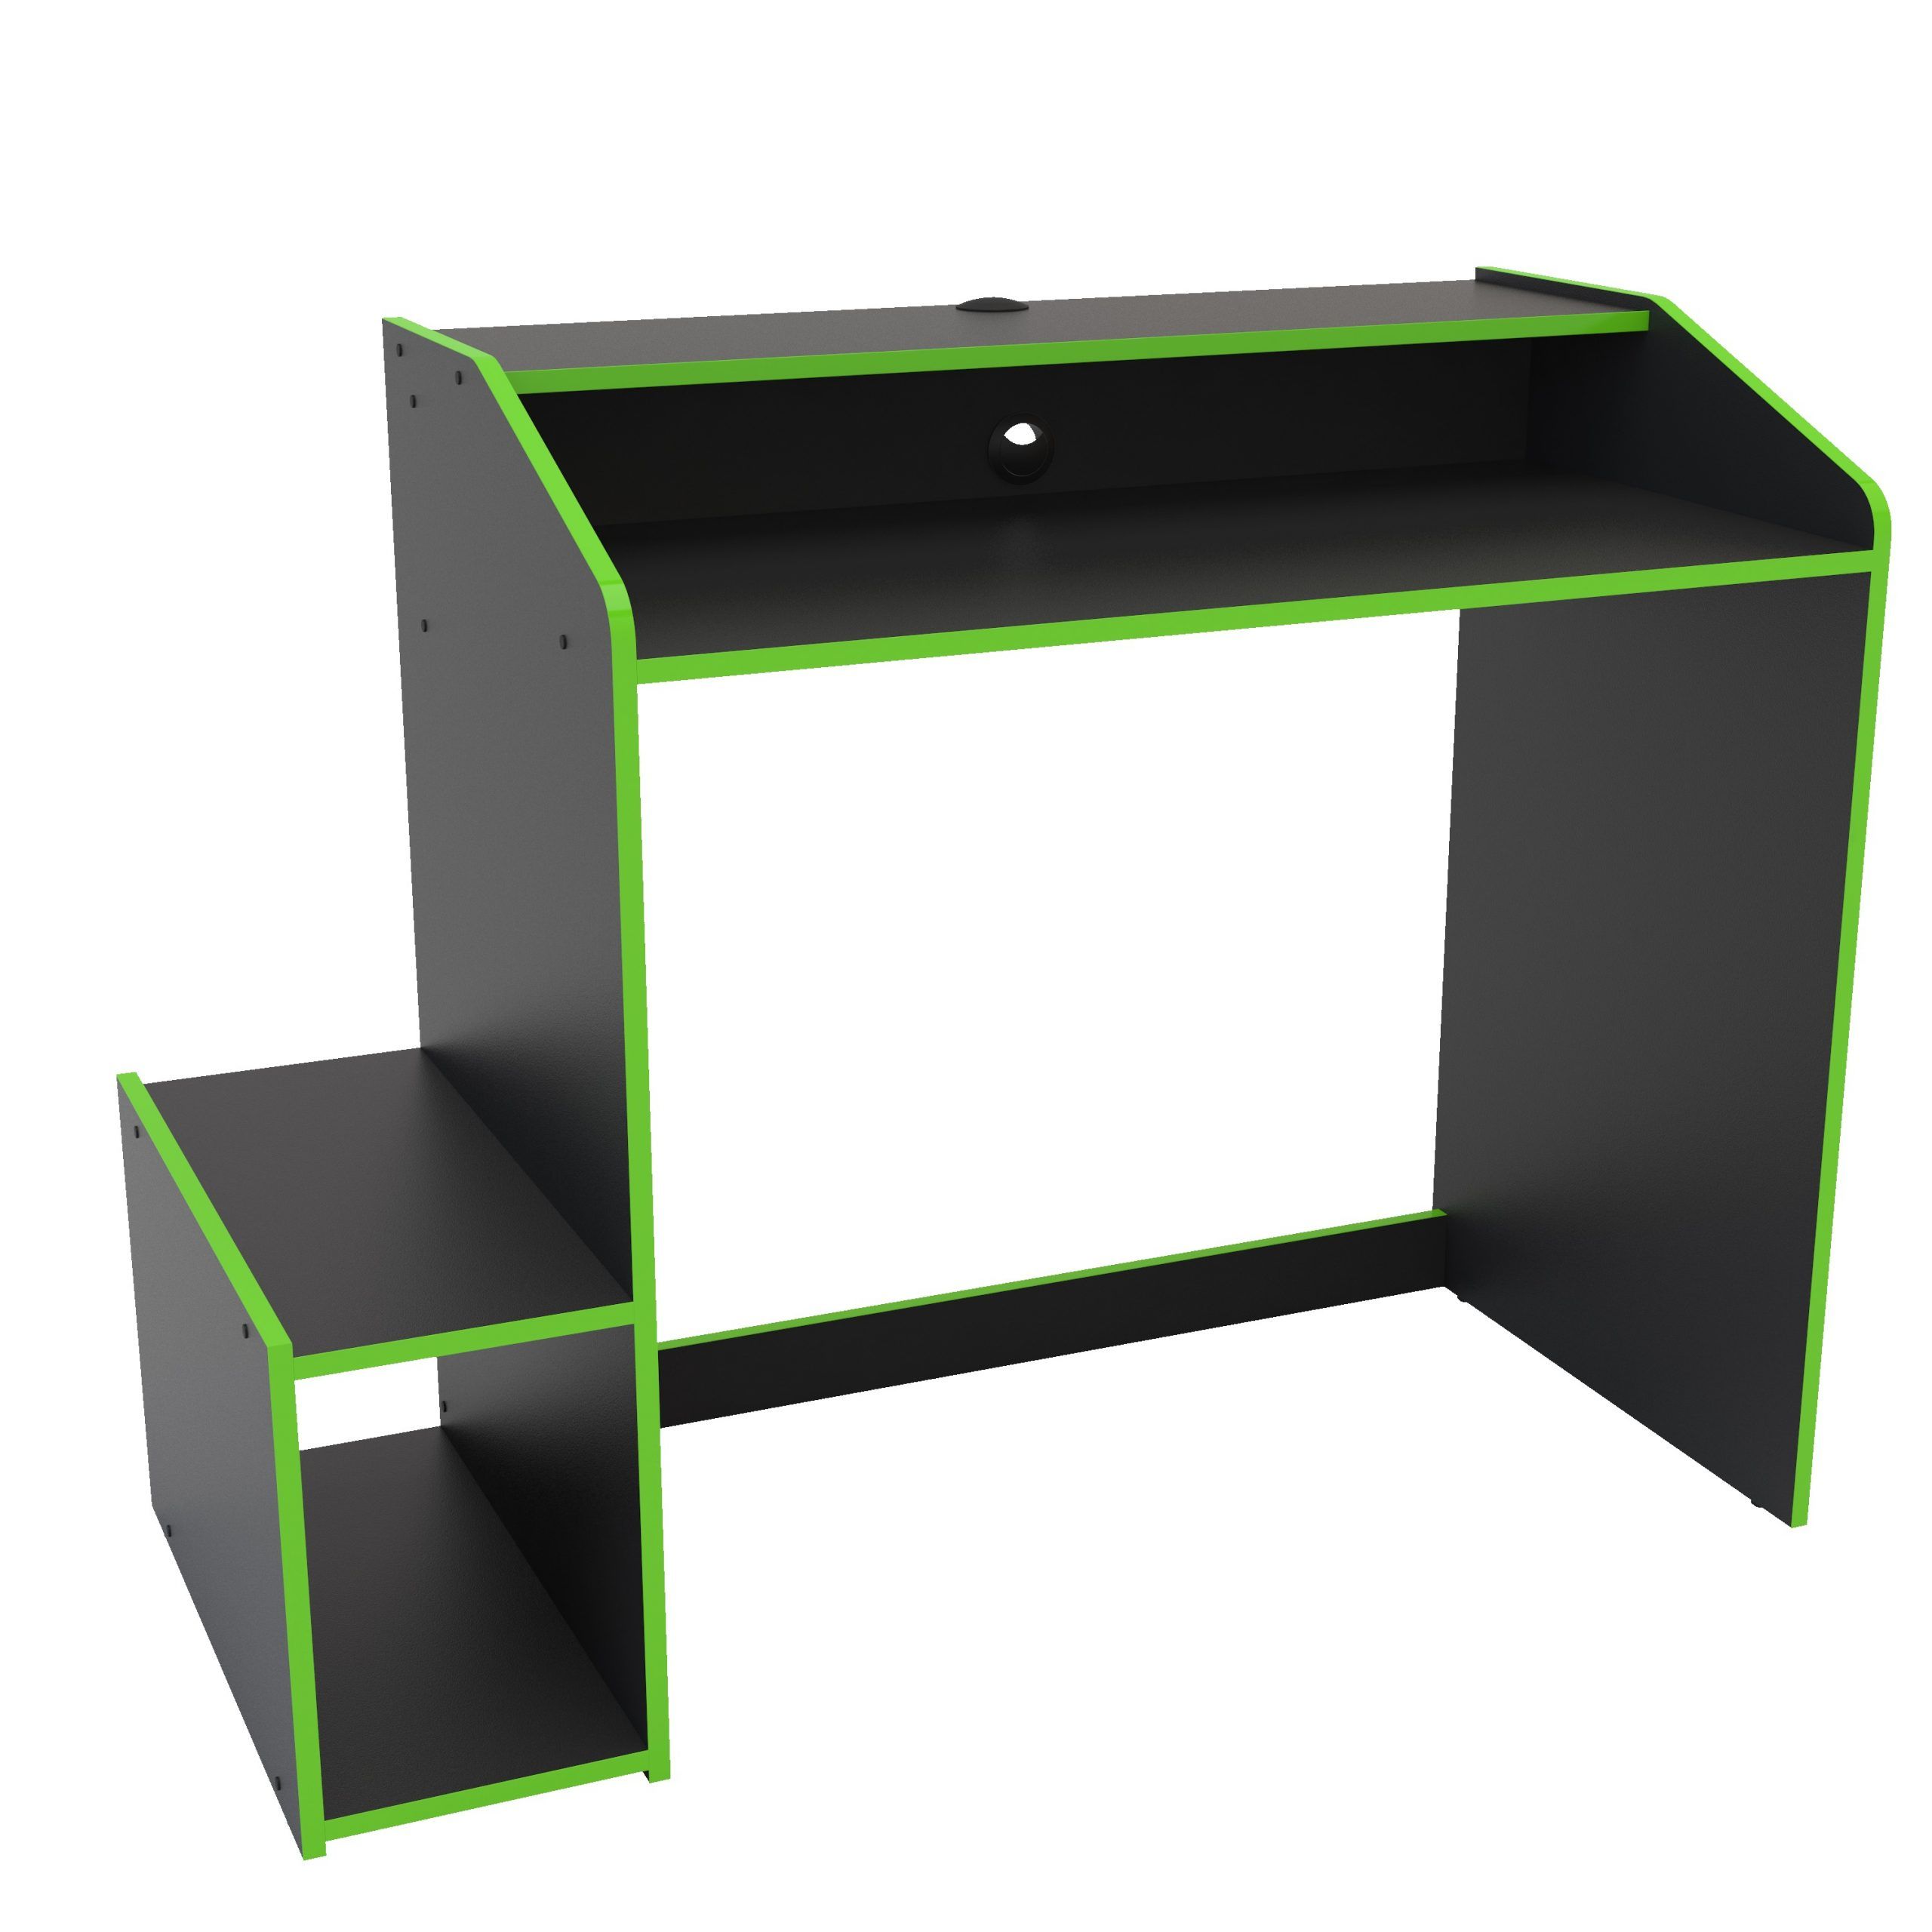 Polifurniture Legend Gaming Desk, Black And Green – Walmart Intended For Black Metal Gaming Desks (View 14 of 15)